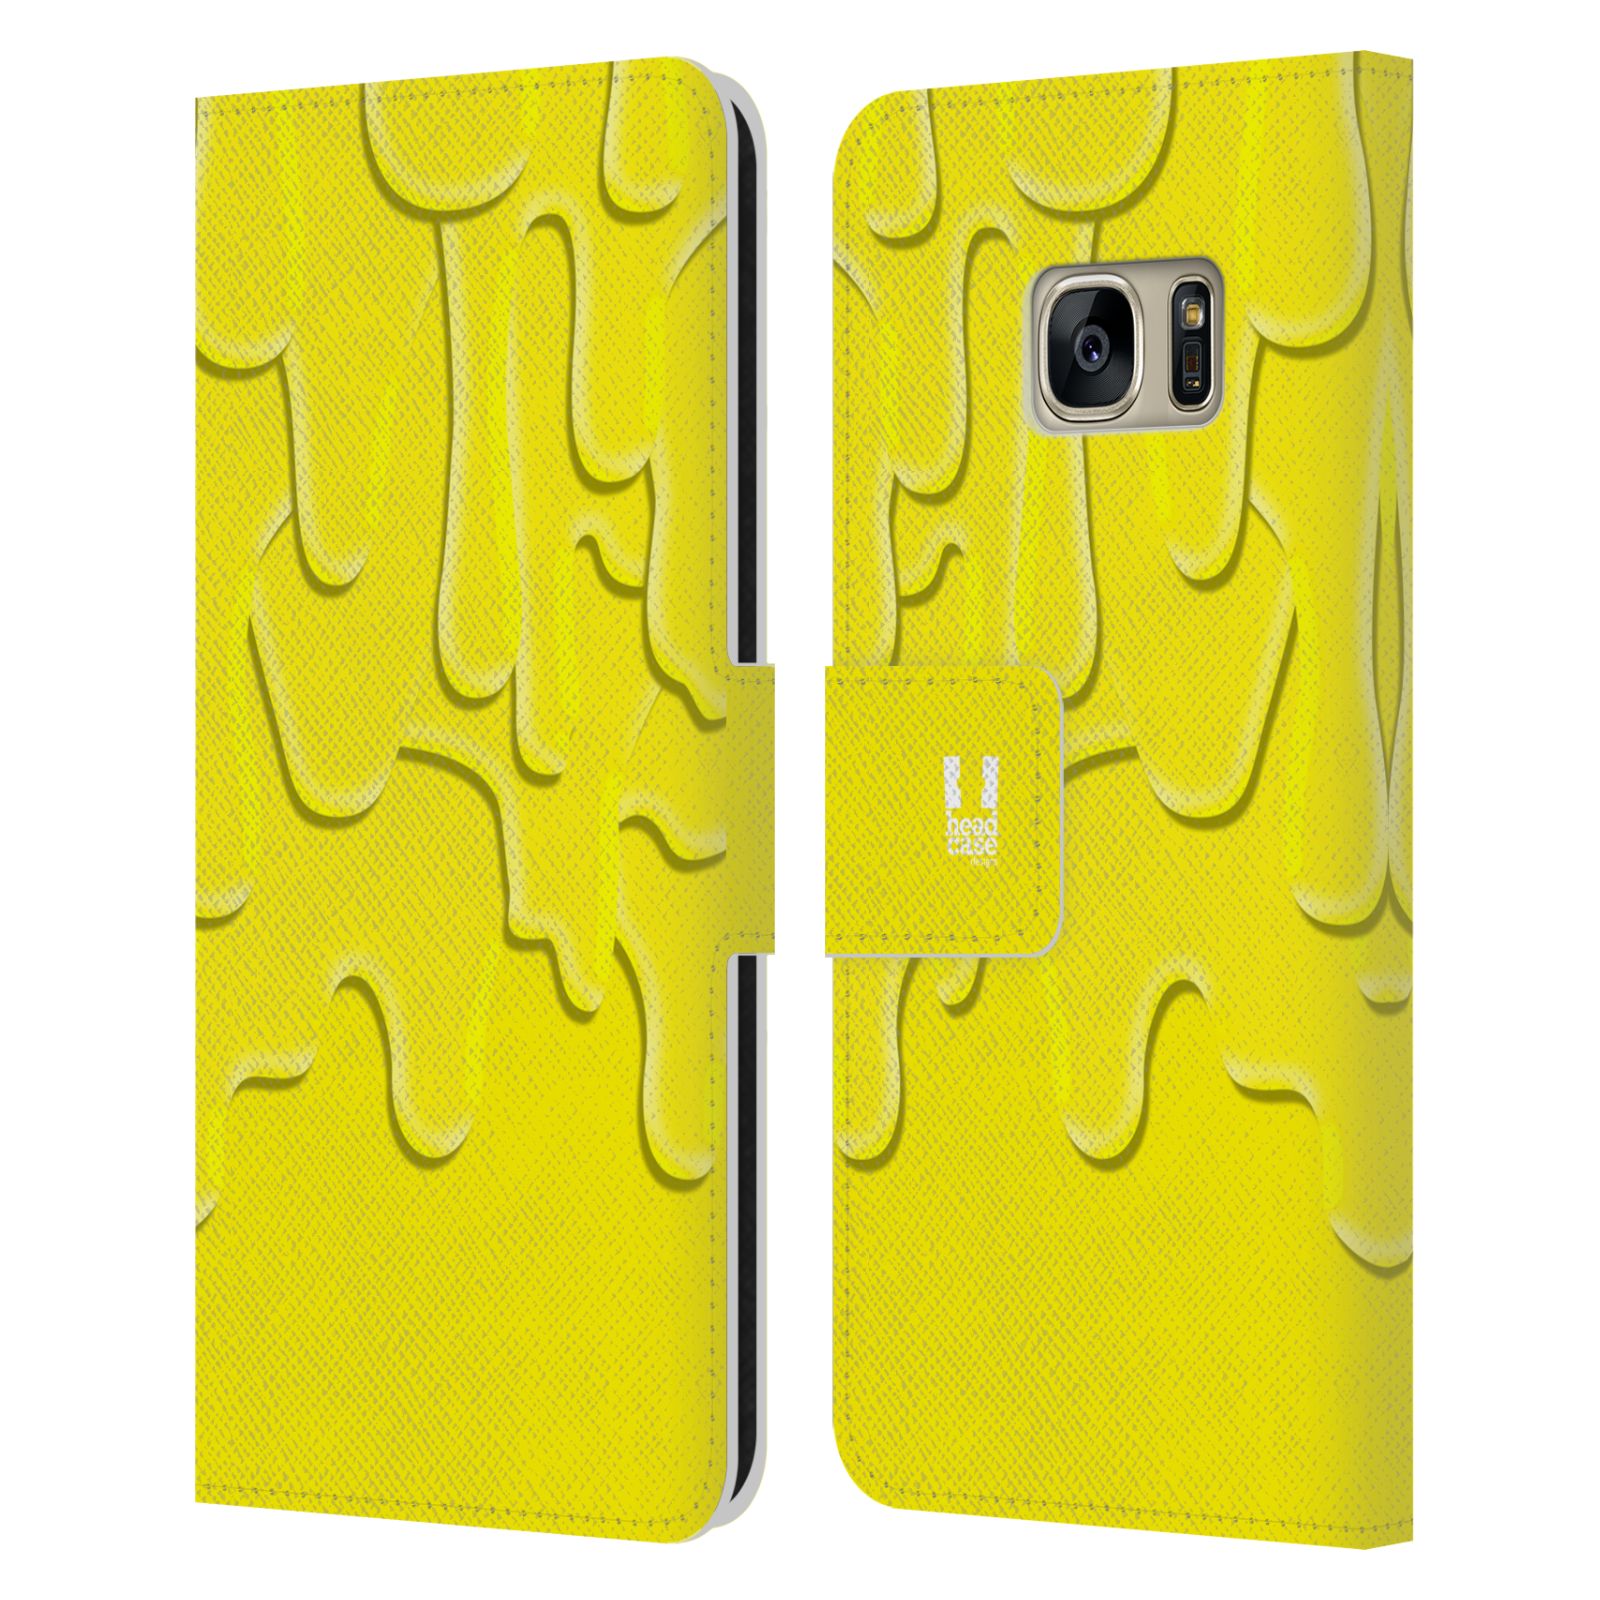 HEAD CASE Flipové pouzdro pro mobil Samsung Galaxy S7 (G9300) ZÁPLAVA BARVA žlutá